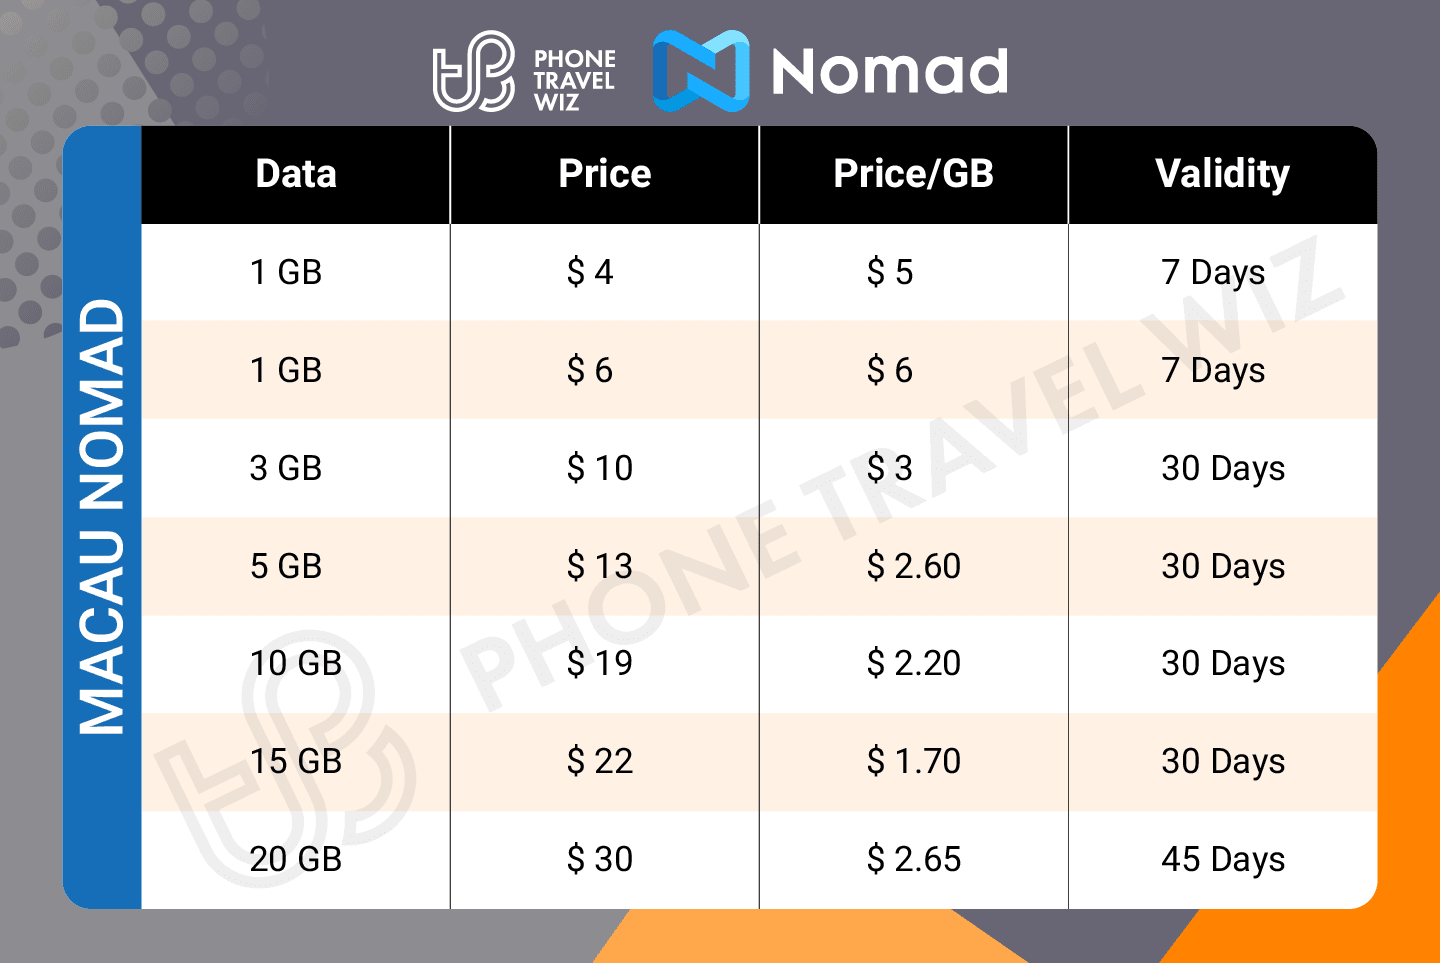 Nomad Macau eSIM Price & Data Details Infographic by Phone Travel Wiz